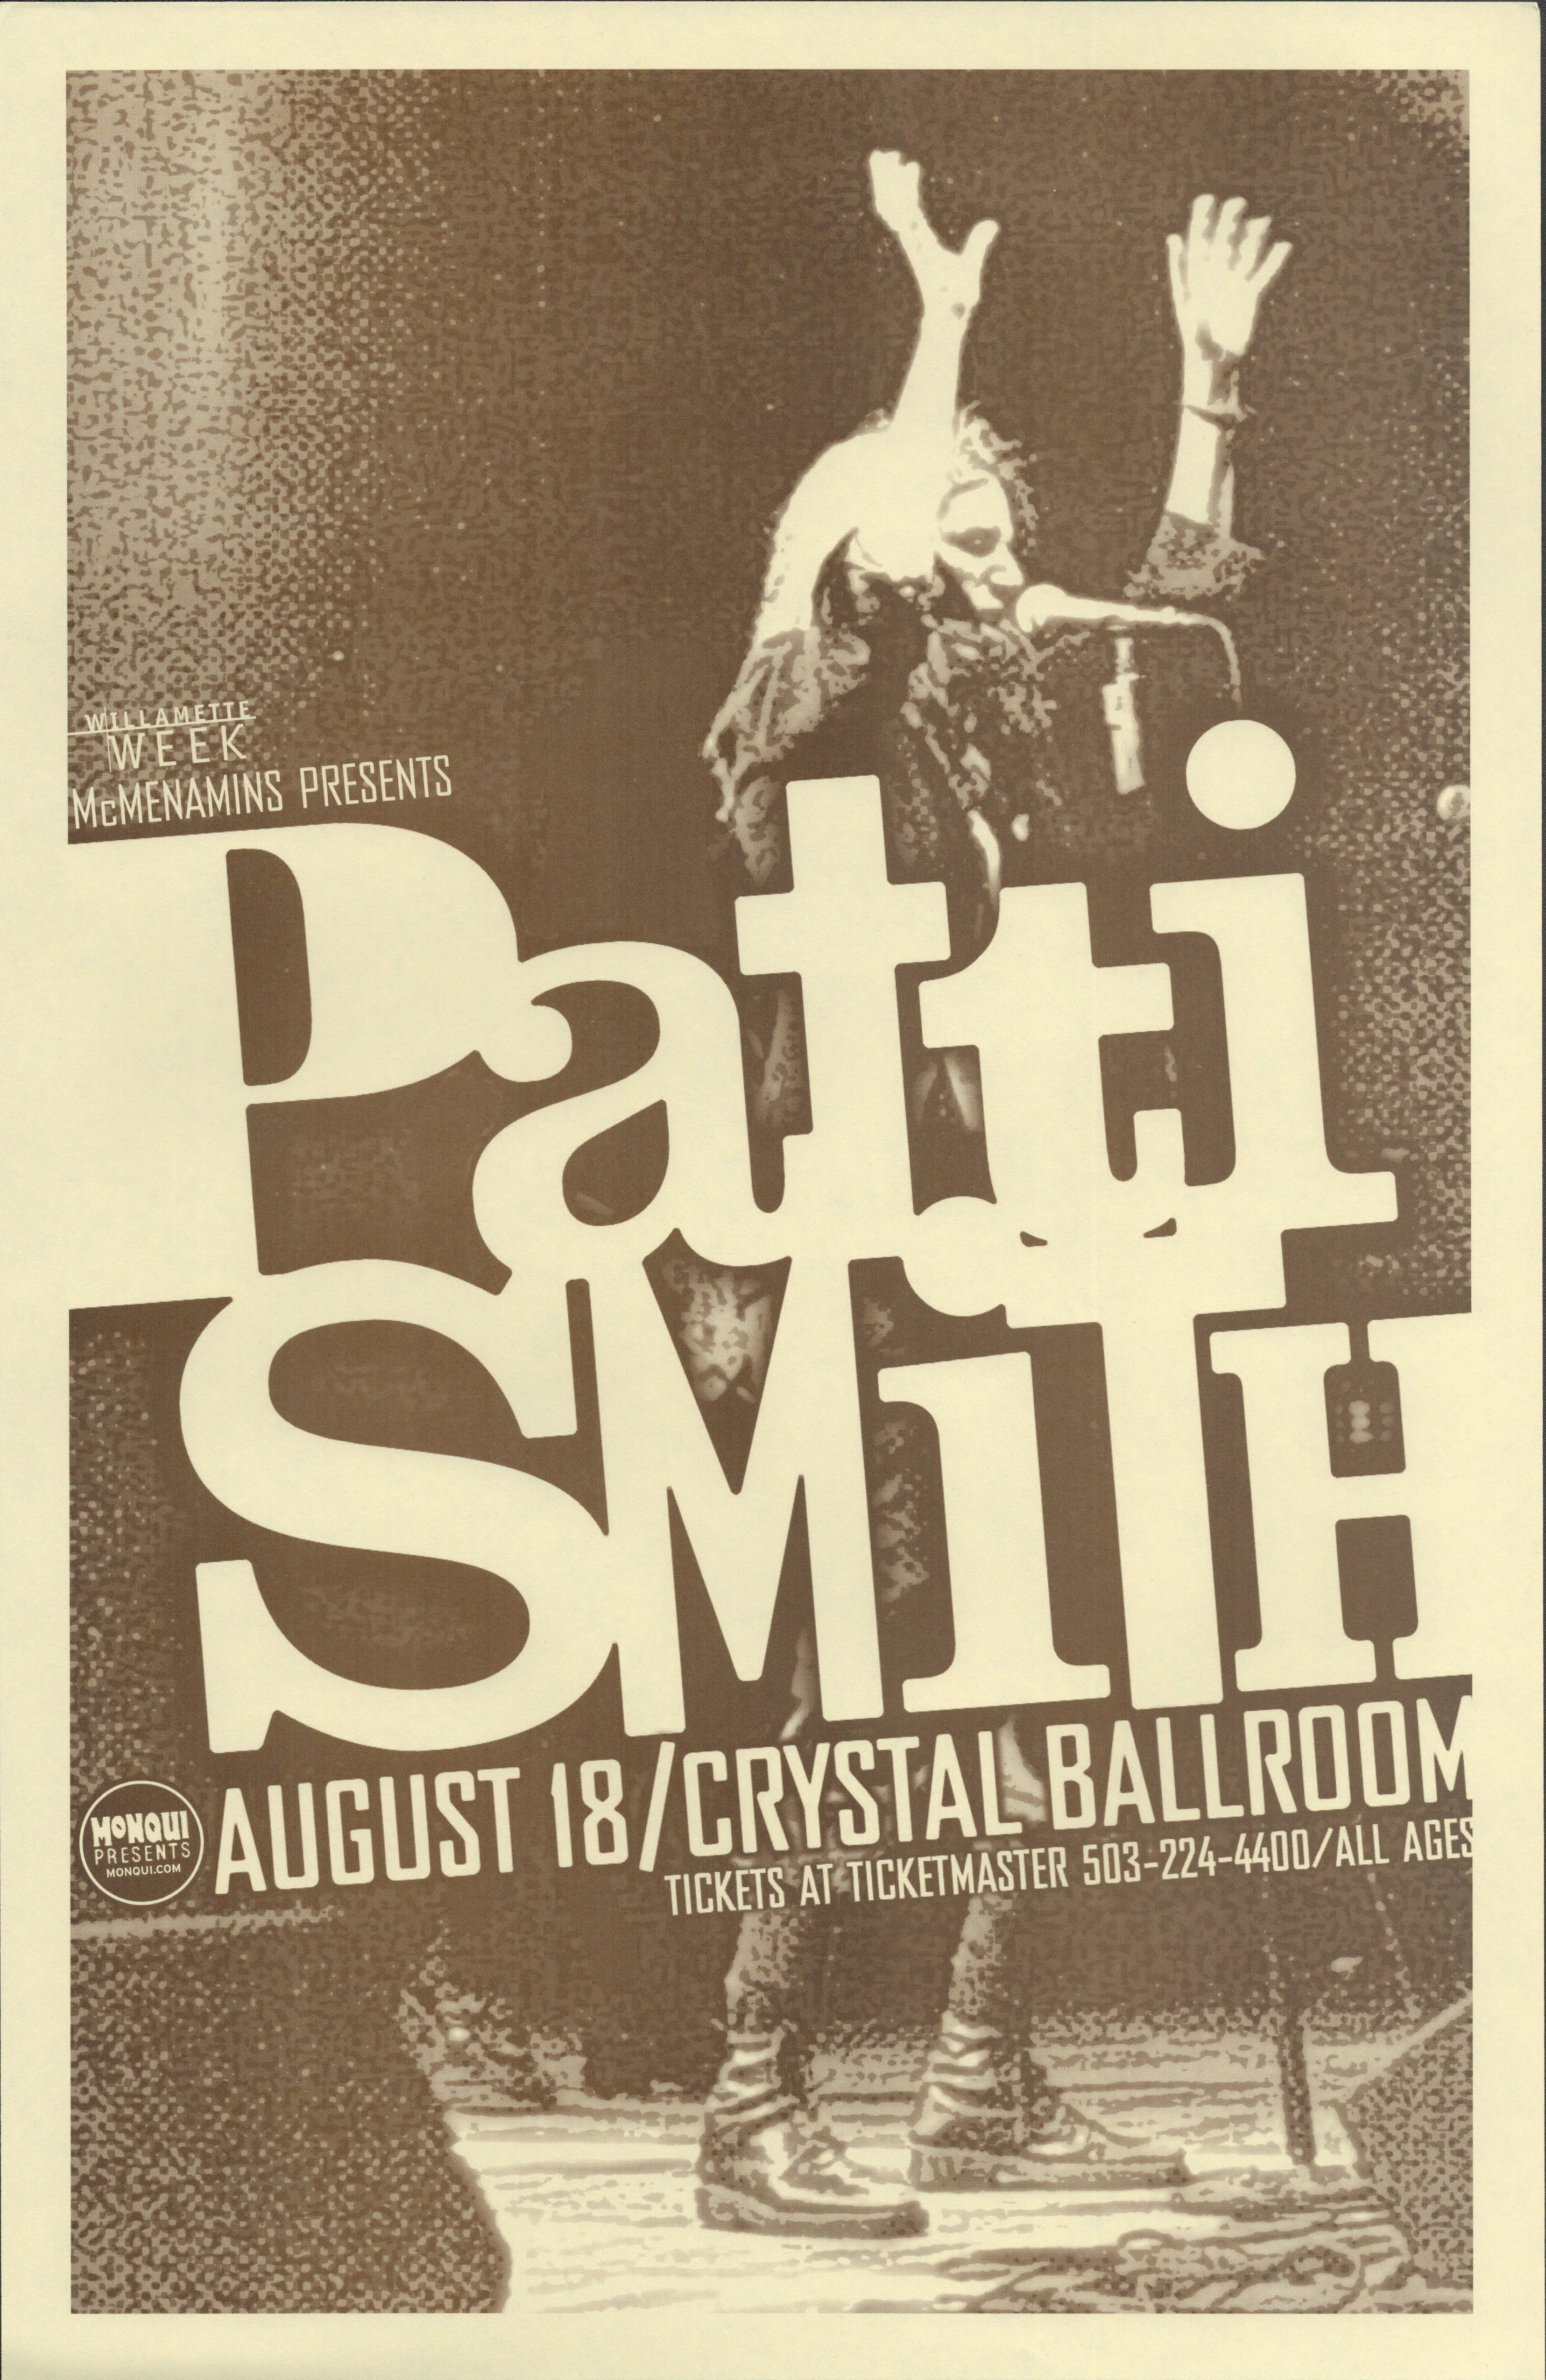 MXP-181.4 Patti Smith Crystal Ballroom 2004 Concert Poster